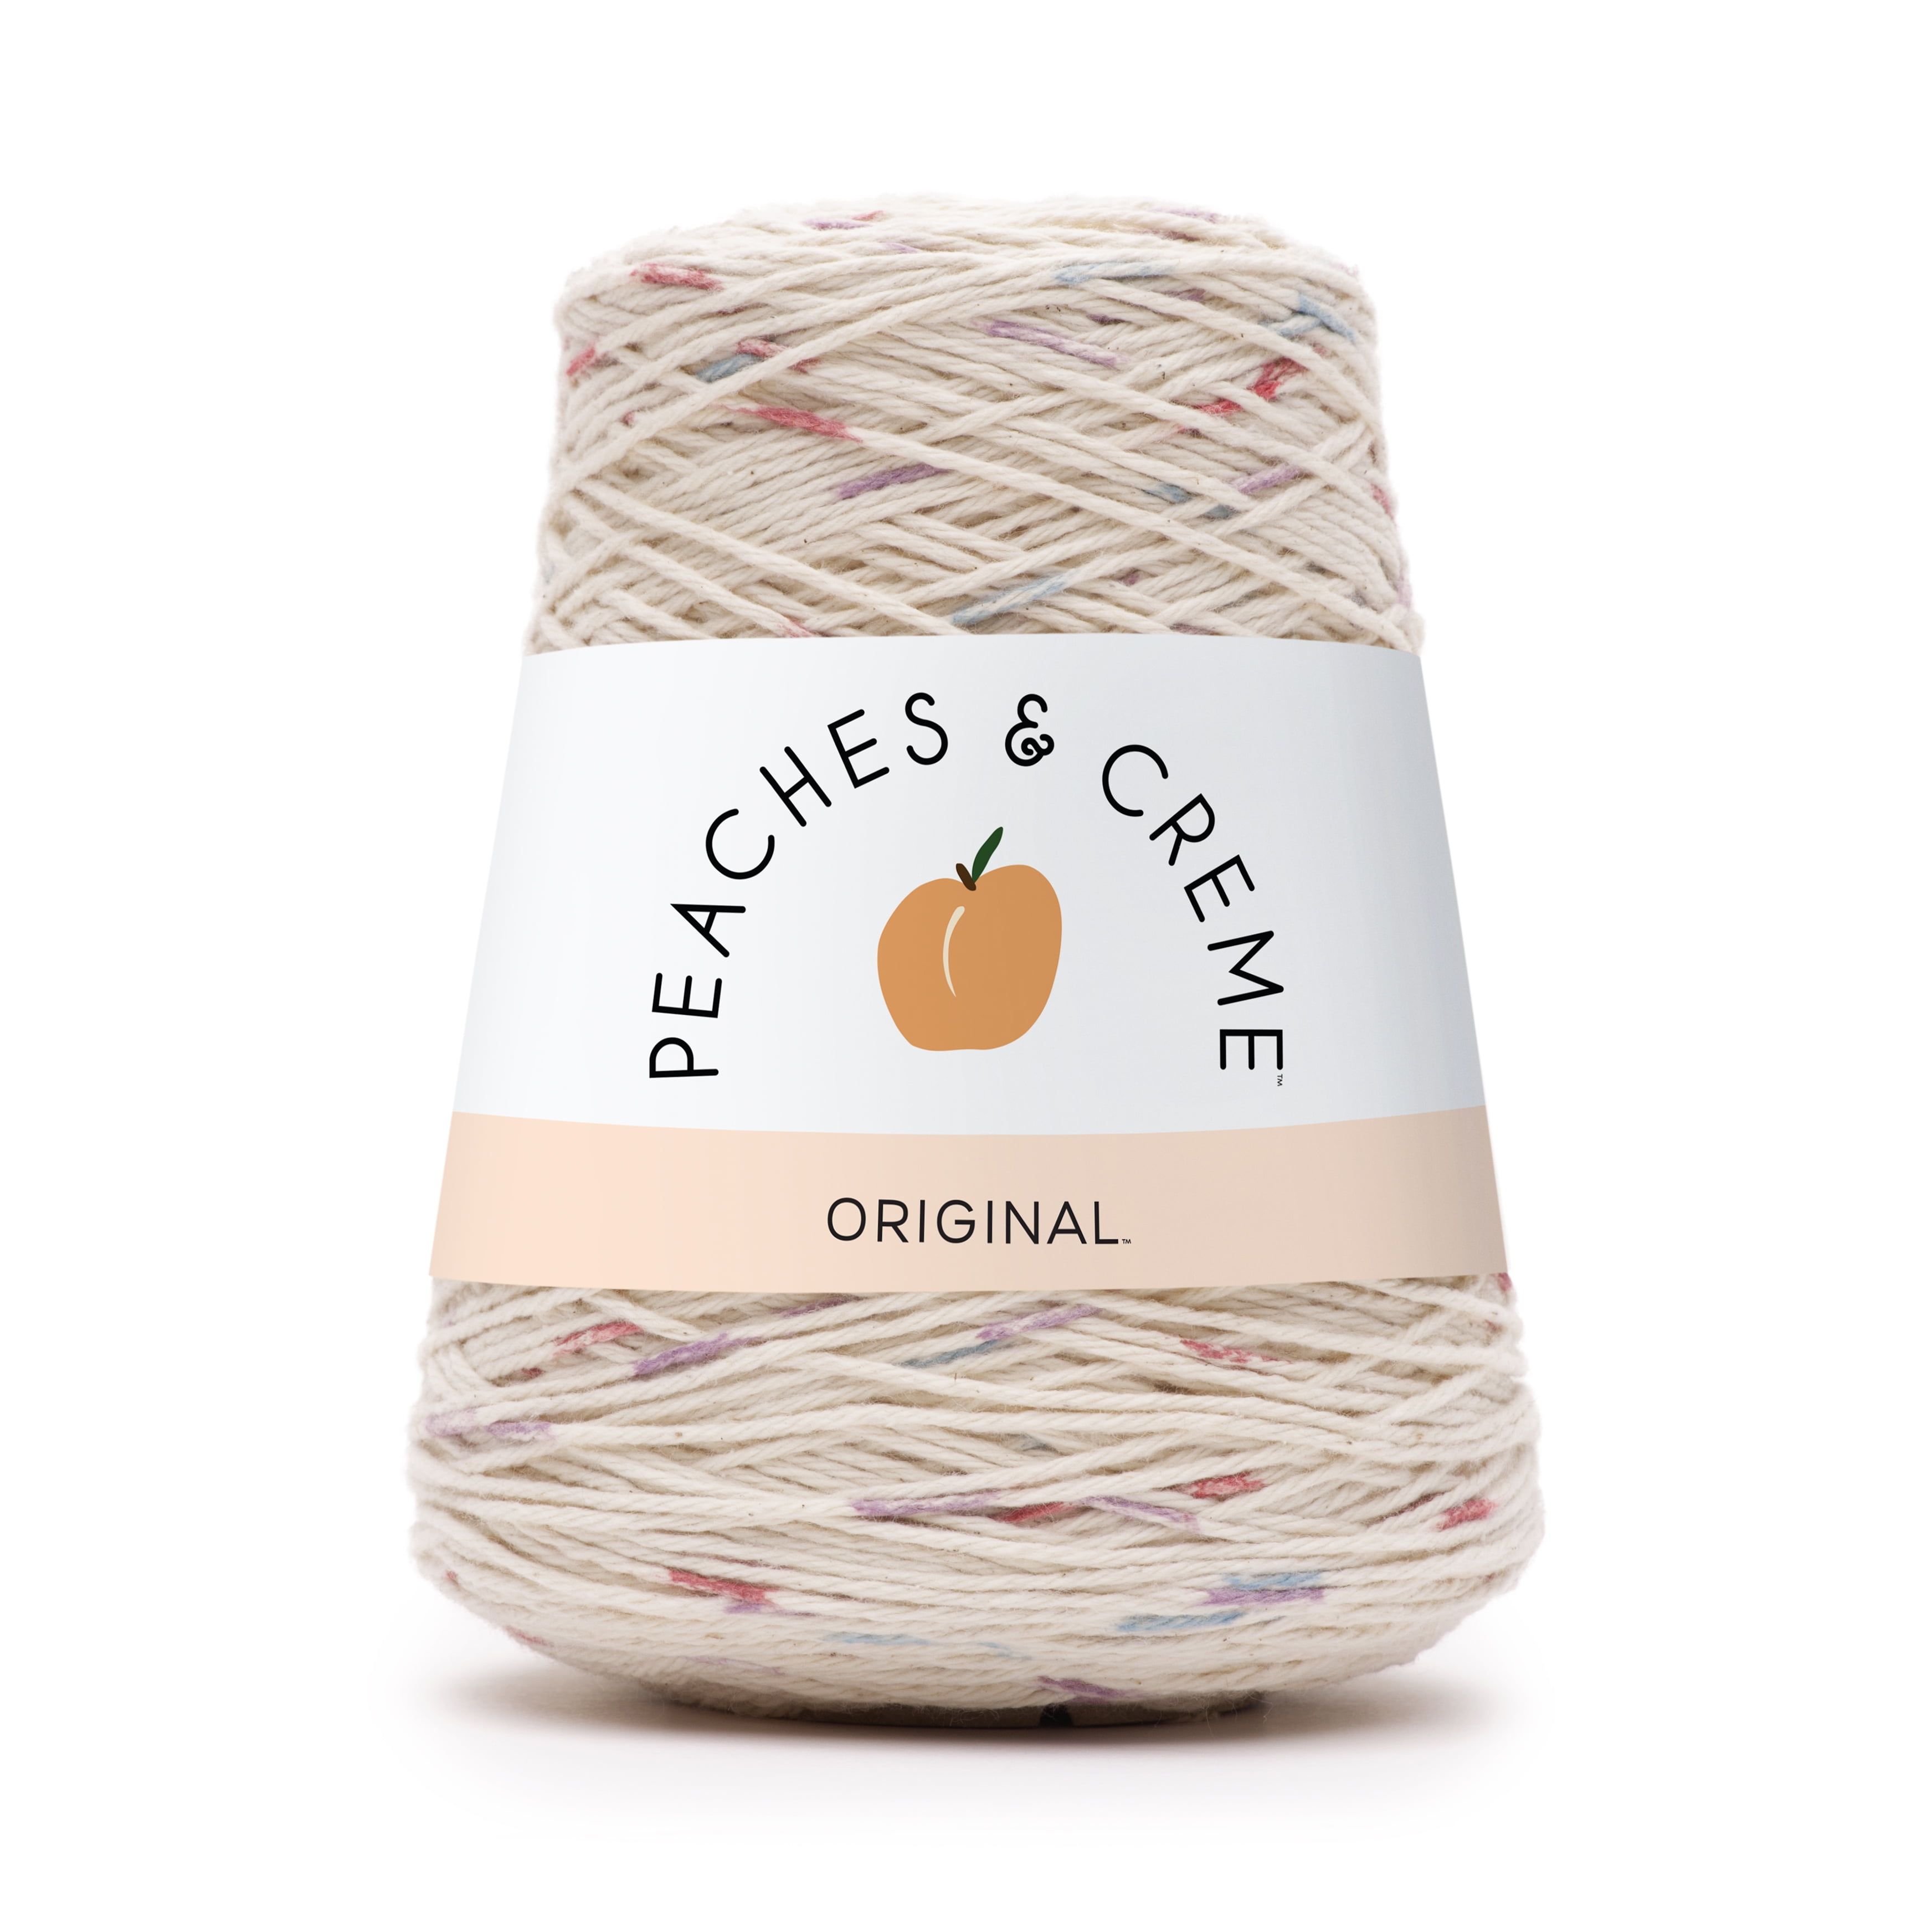 Peaches cream cotton yarn